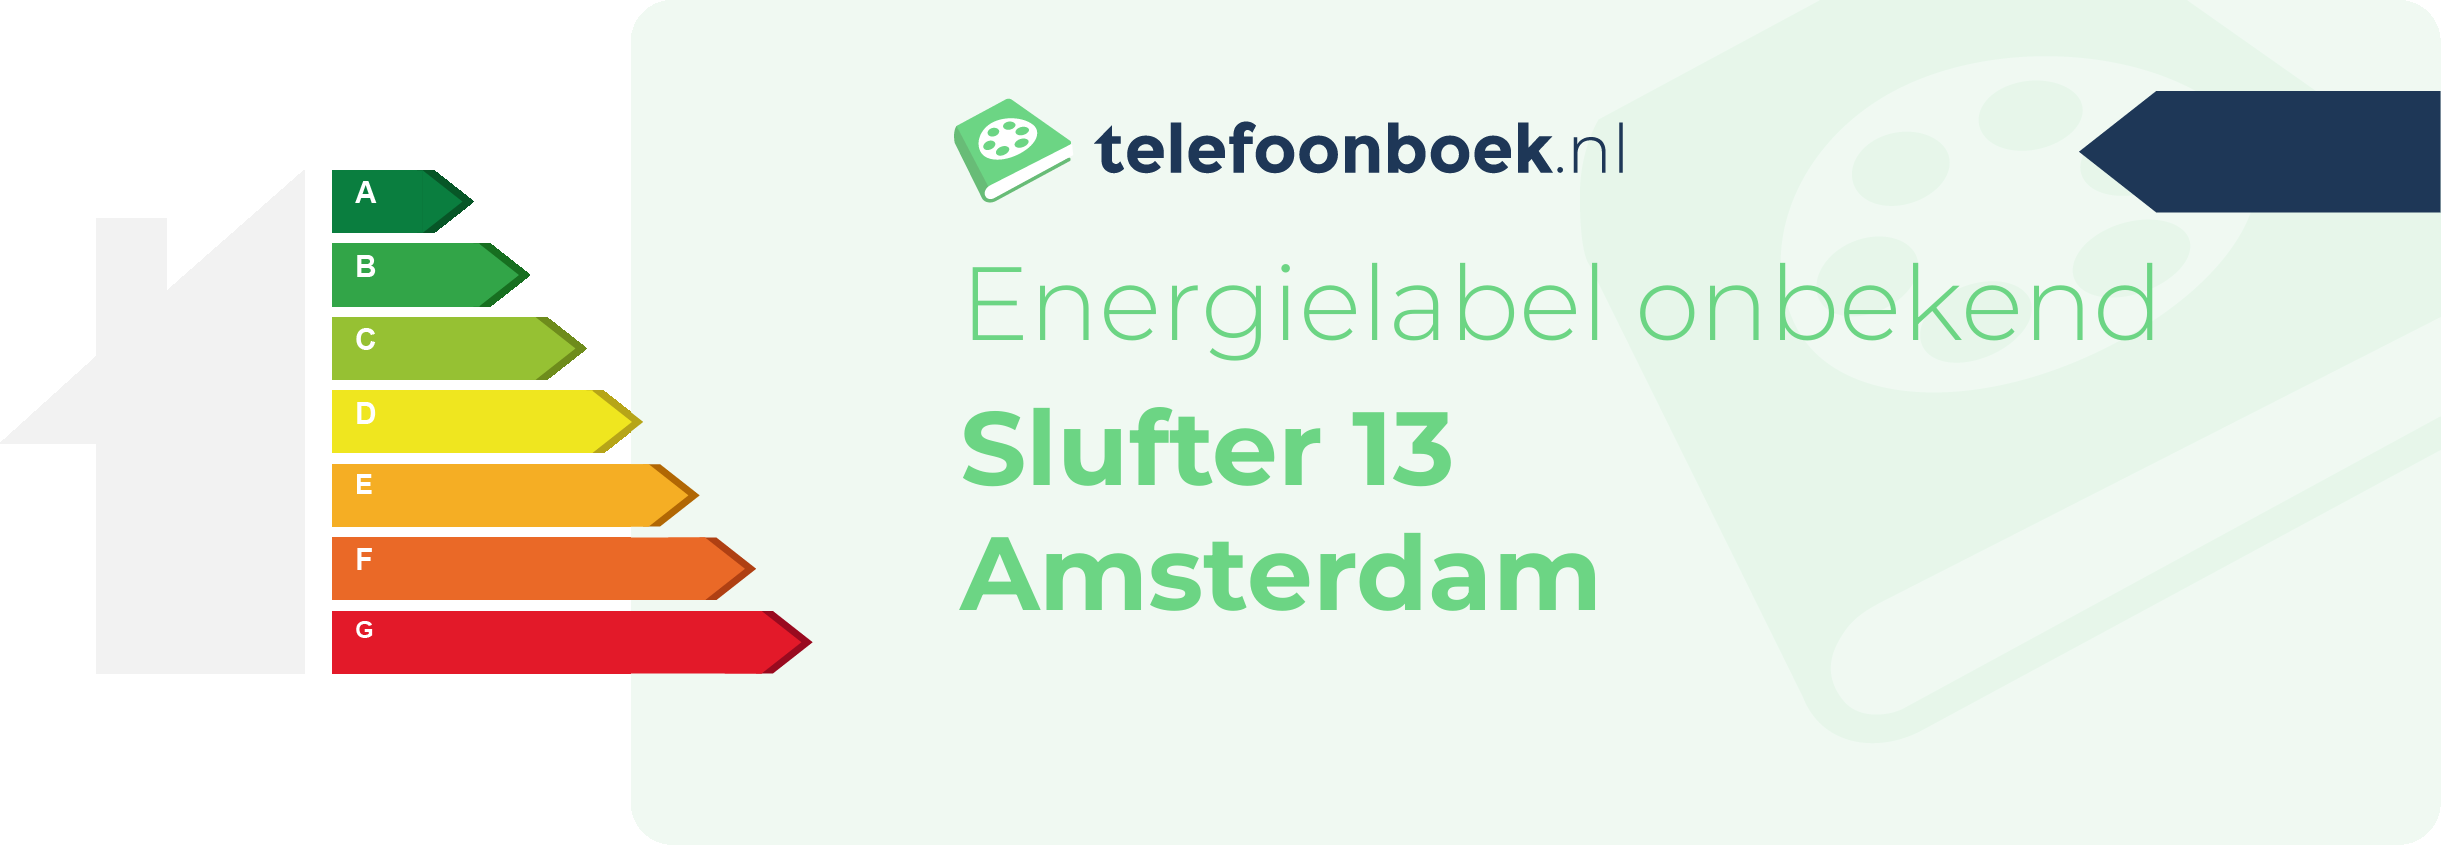 Energielabel Slufter 13 Amsterdam